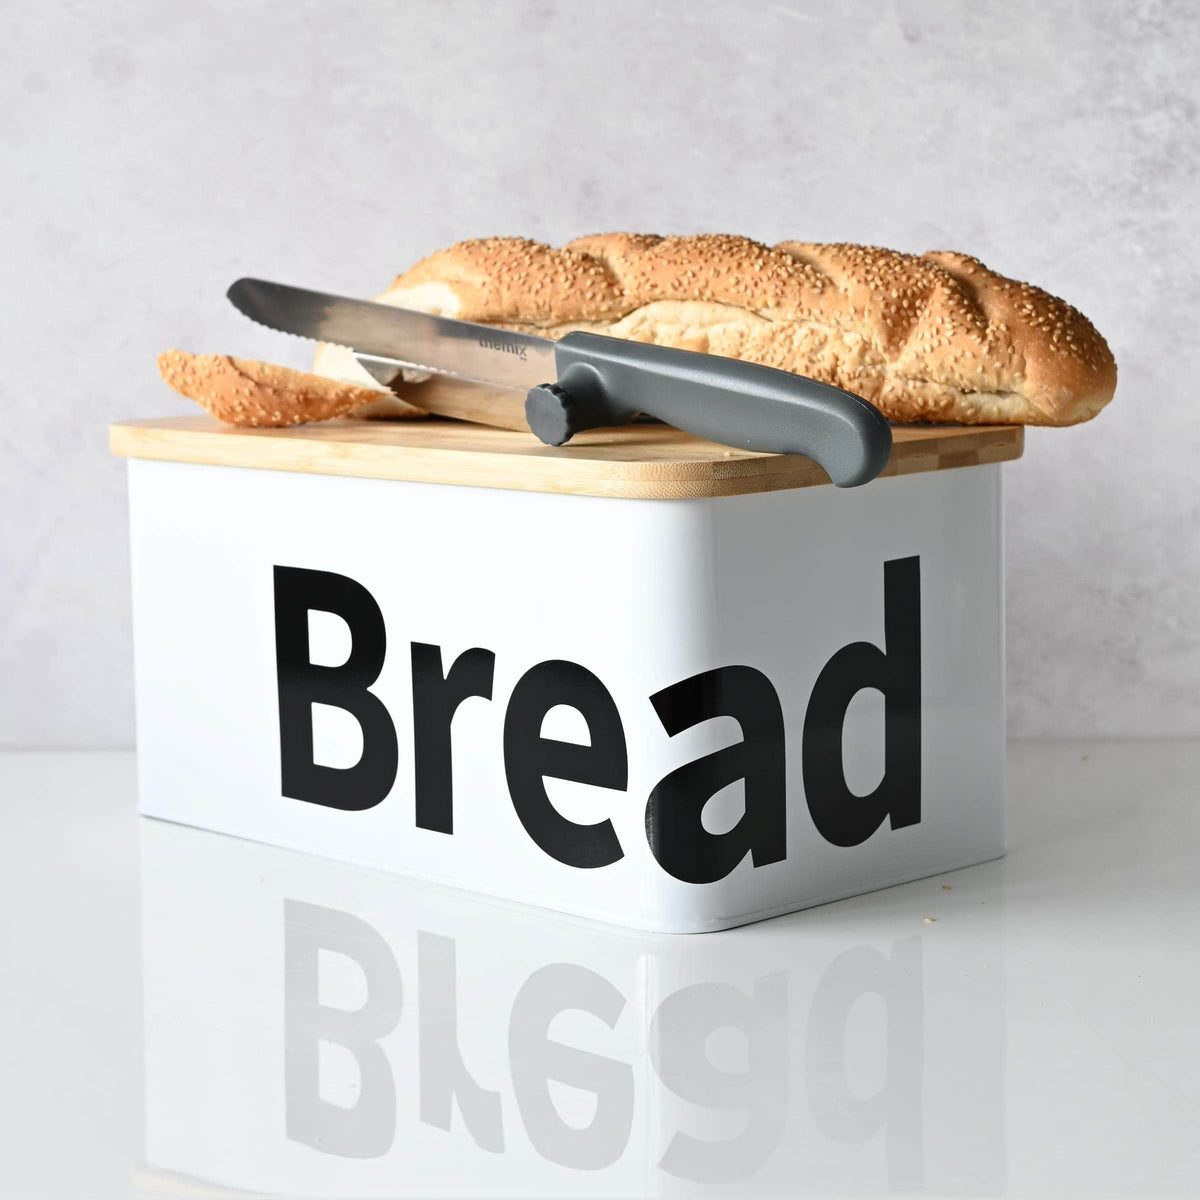 Five Simply Smart Airtight High Quality Design Bamboo Bread Box